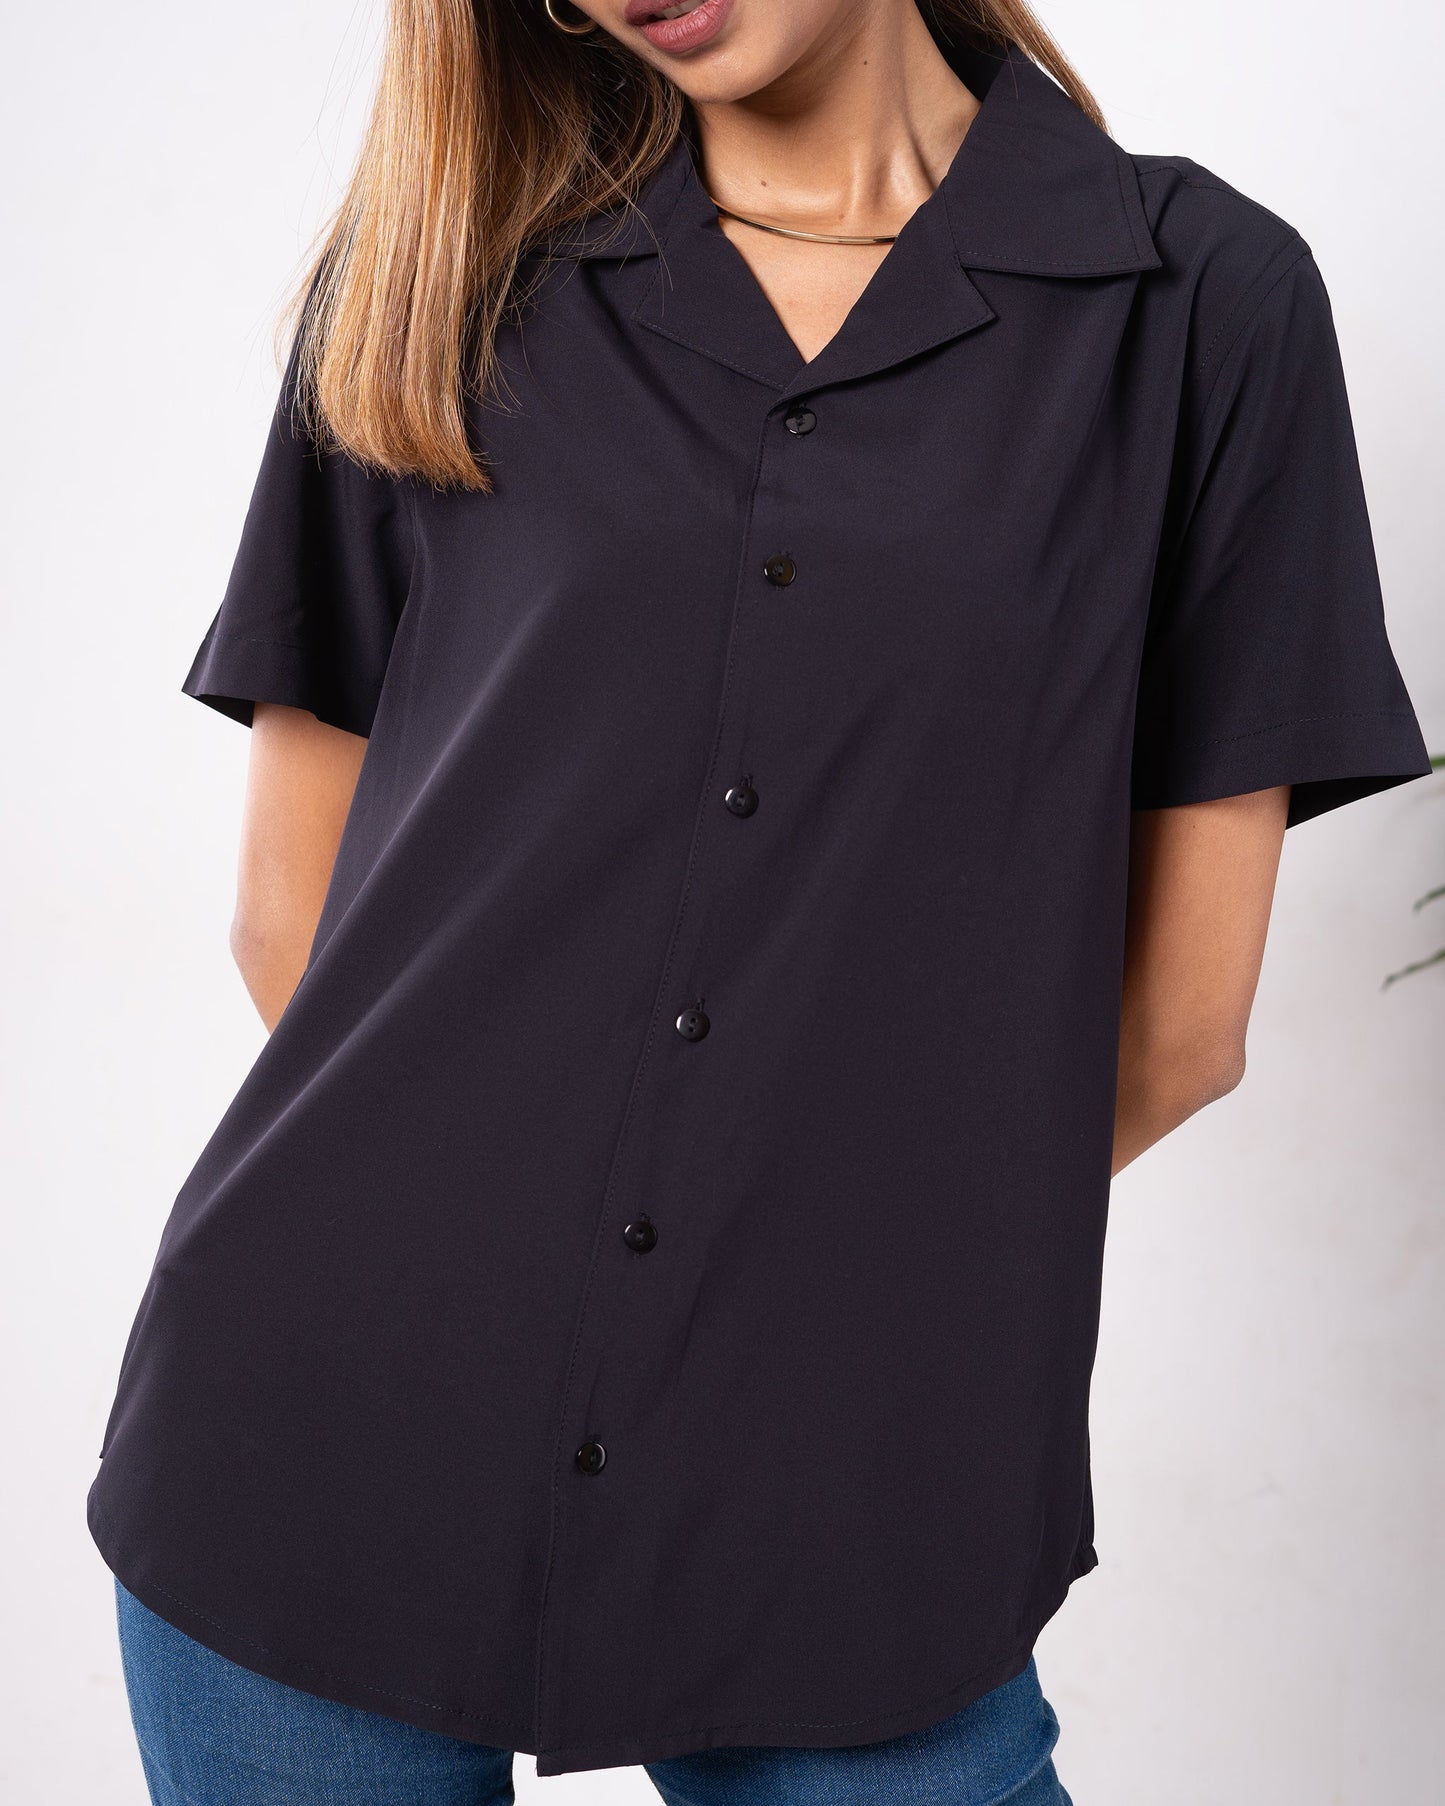 Cubana - Black - Cuban Shirt For Women